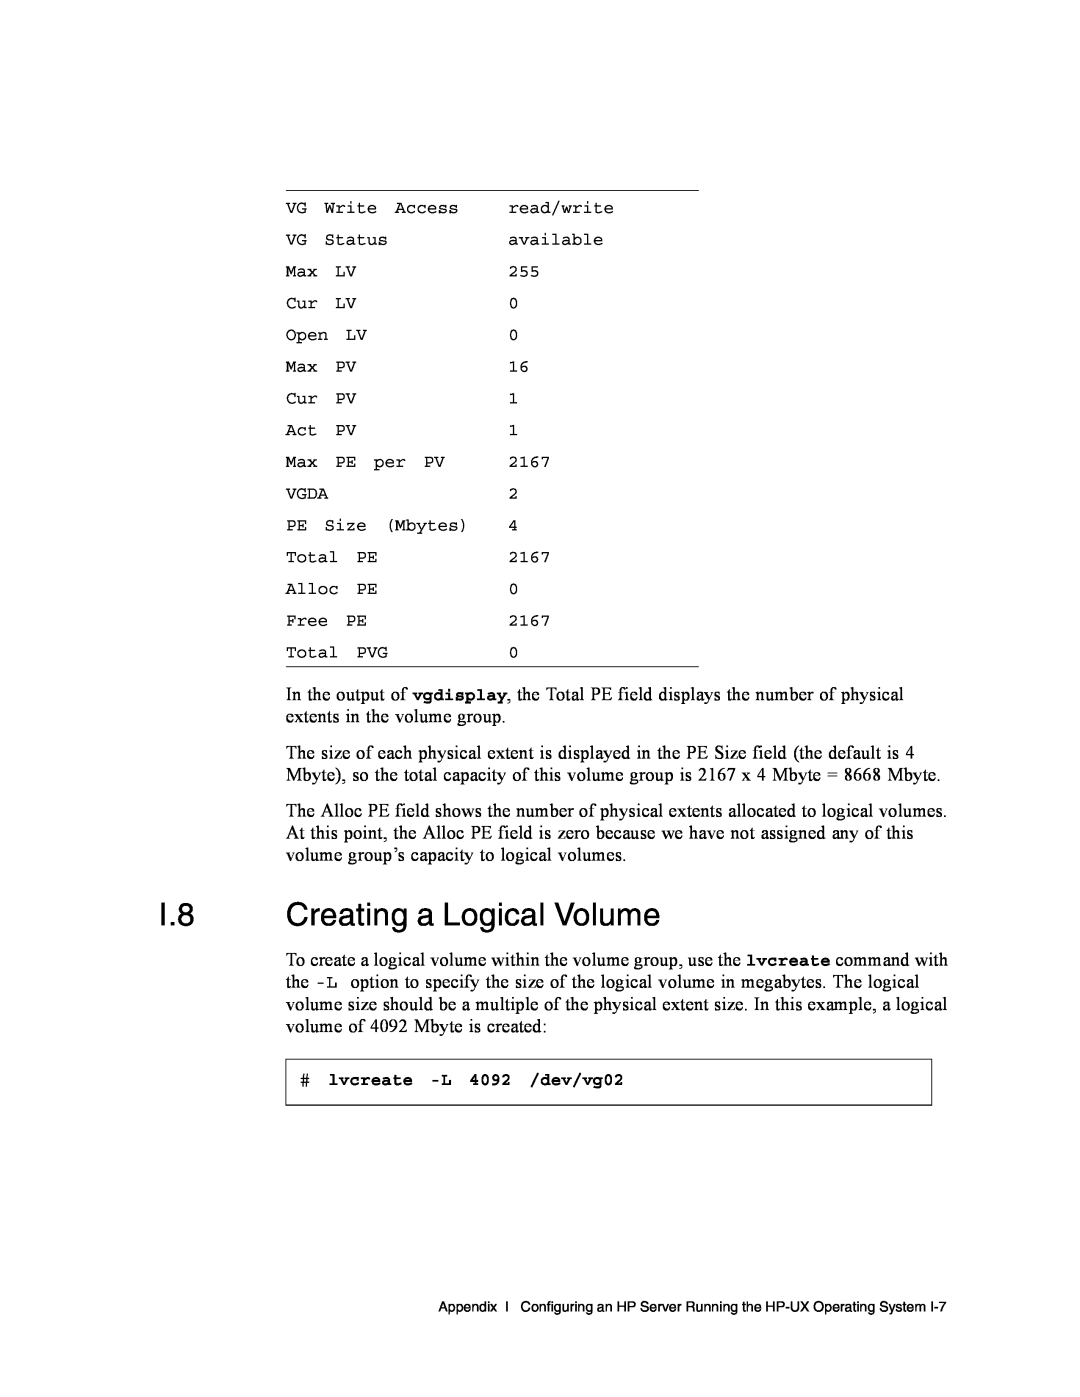 Dot Hill Systems II 200 FC service manual I.8 Creating a Logical Volume, # lvcreate -L 4092 /dev/vg02 